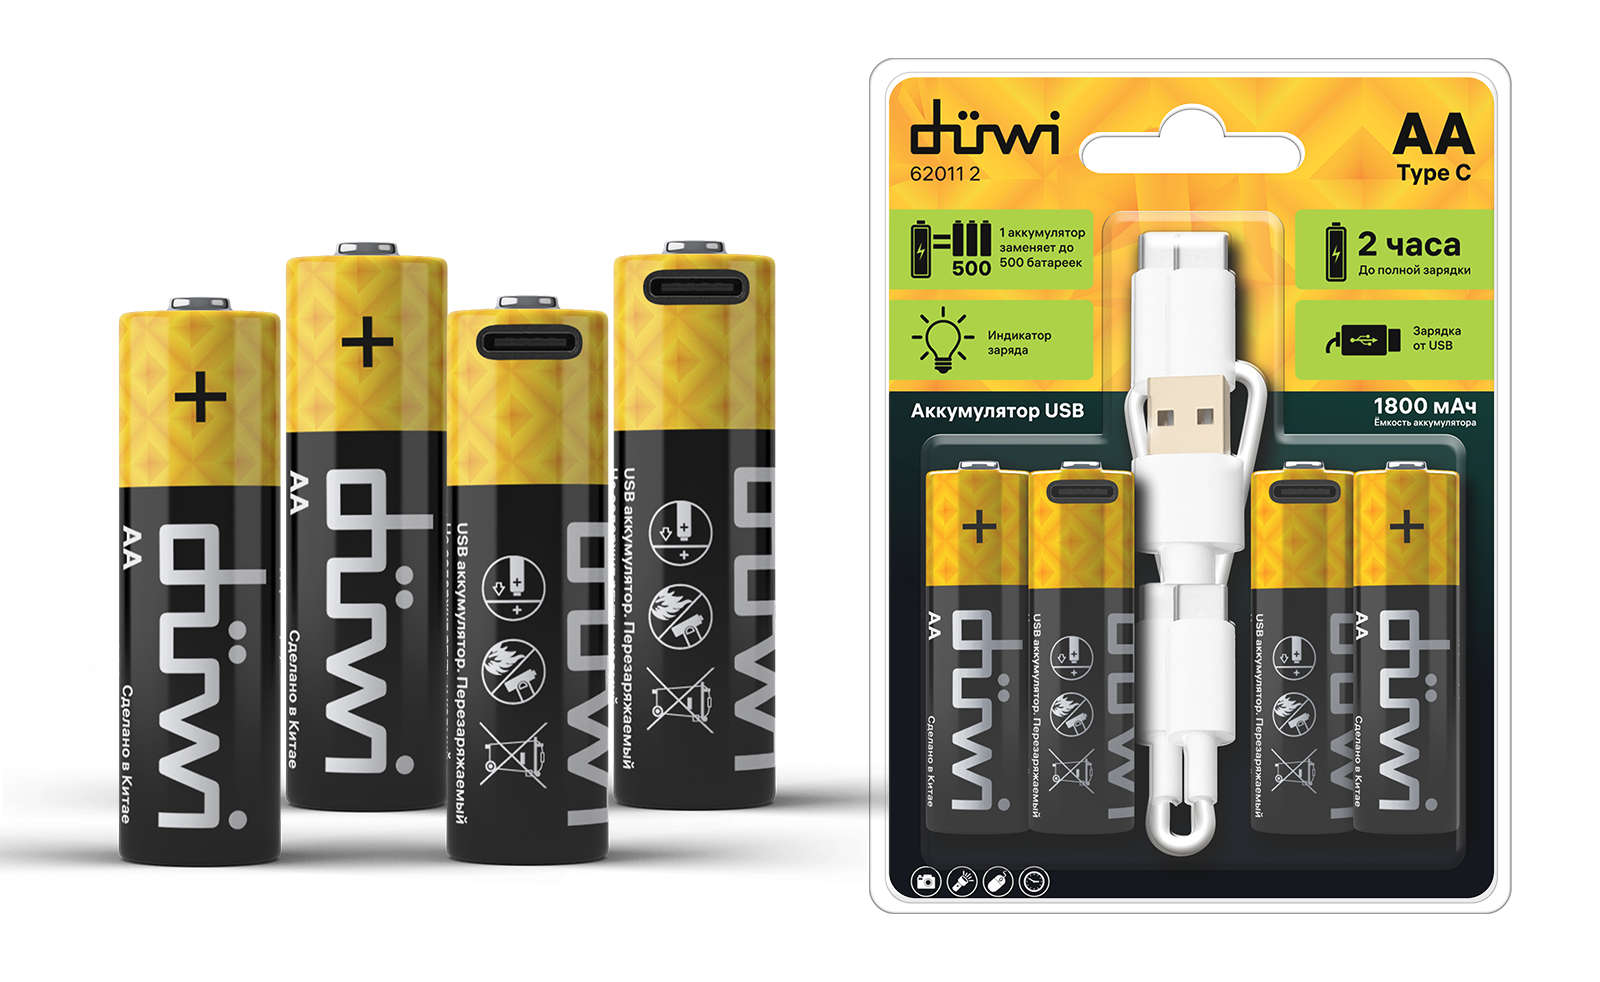 Аккумулятор, USB-C, Li-Ion, AA,1.5V, 1800 мАч, 4шт., кабель для зарядки, 62011 2, duwi